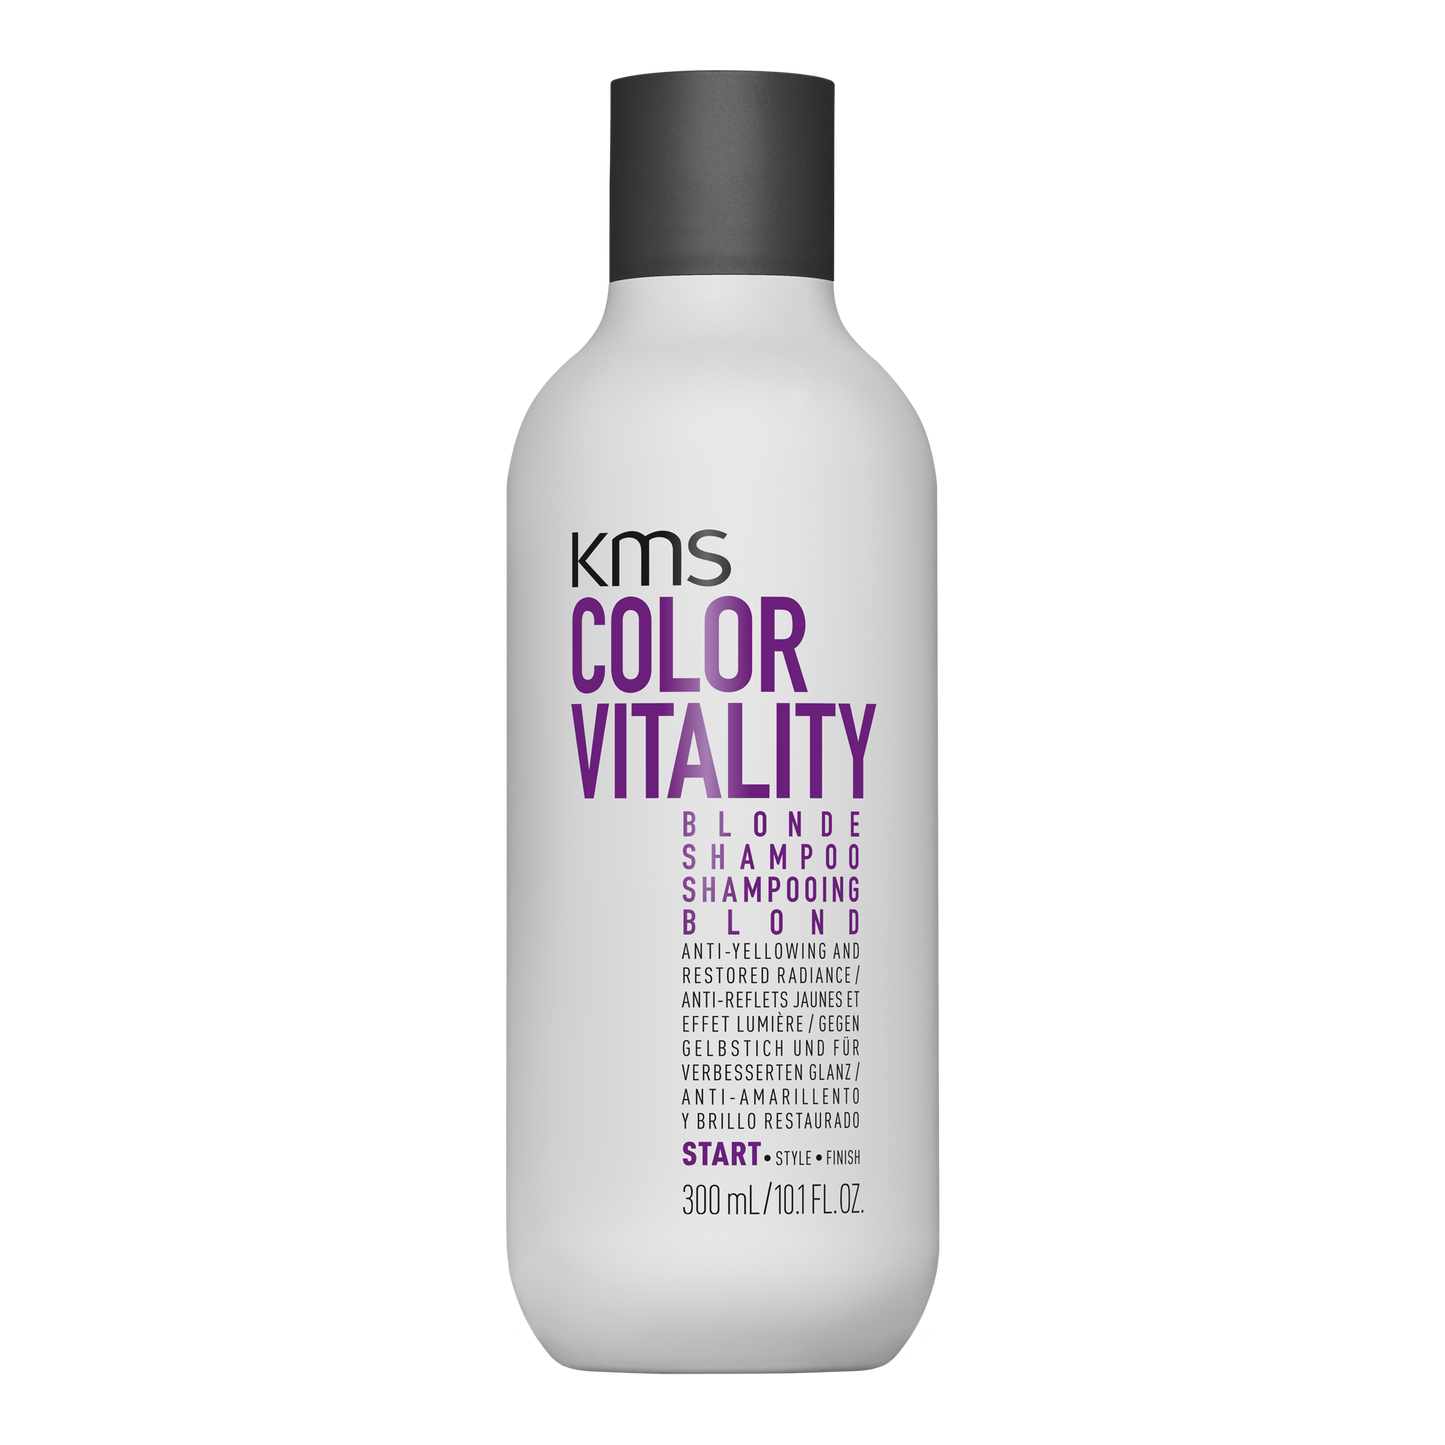 KMS COLORVITALITY Blonde Shampoo 300mL